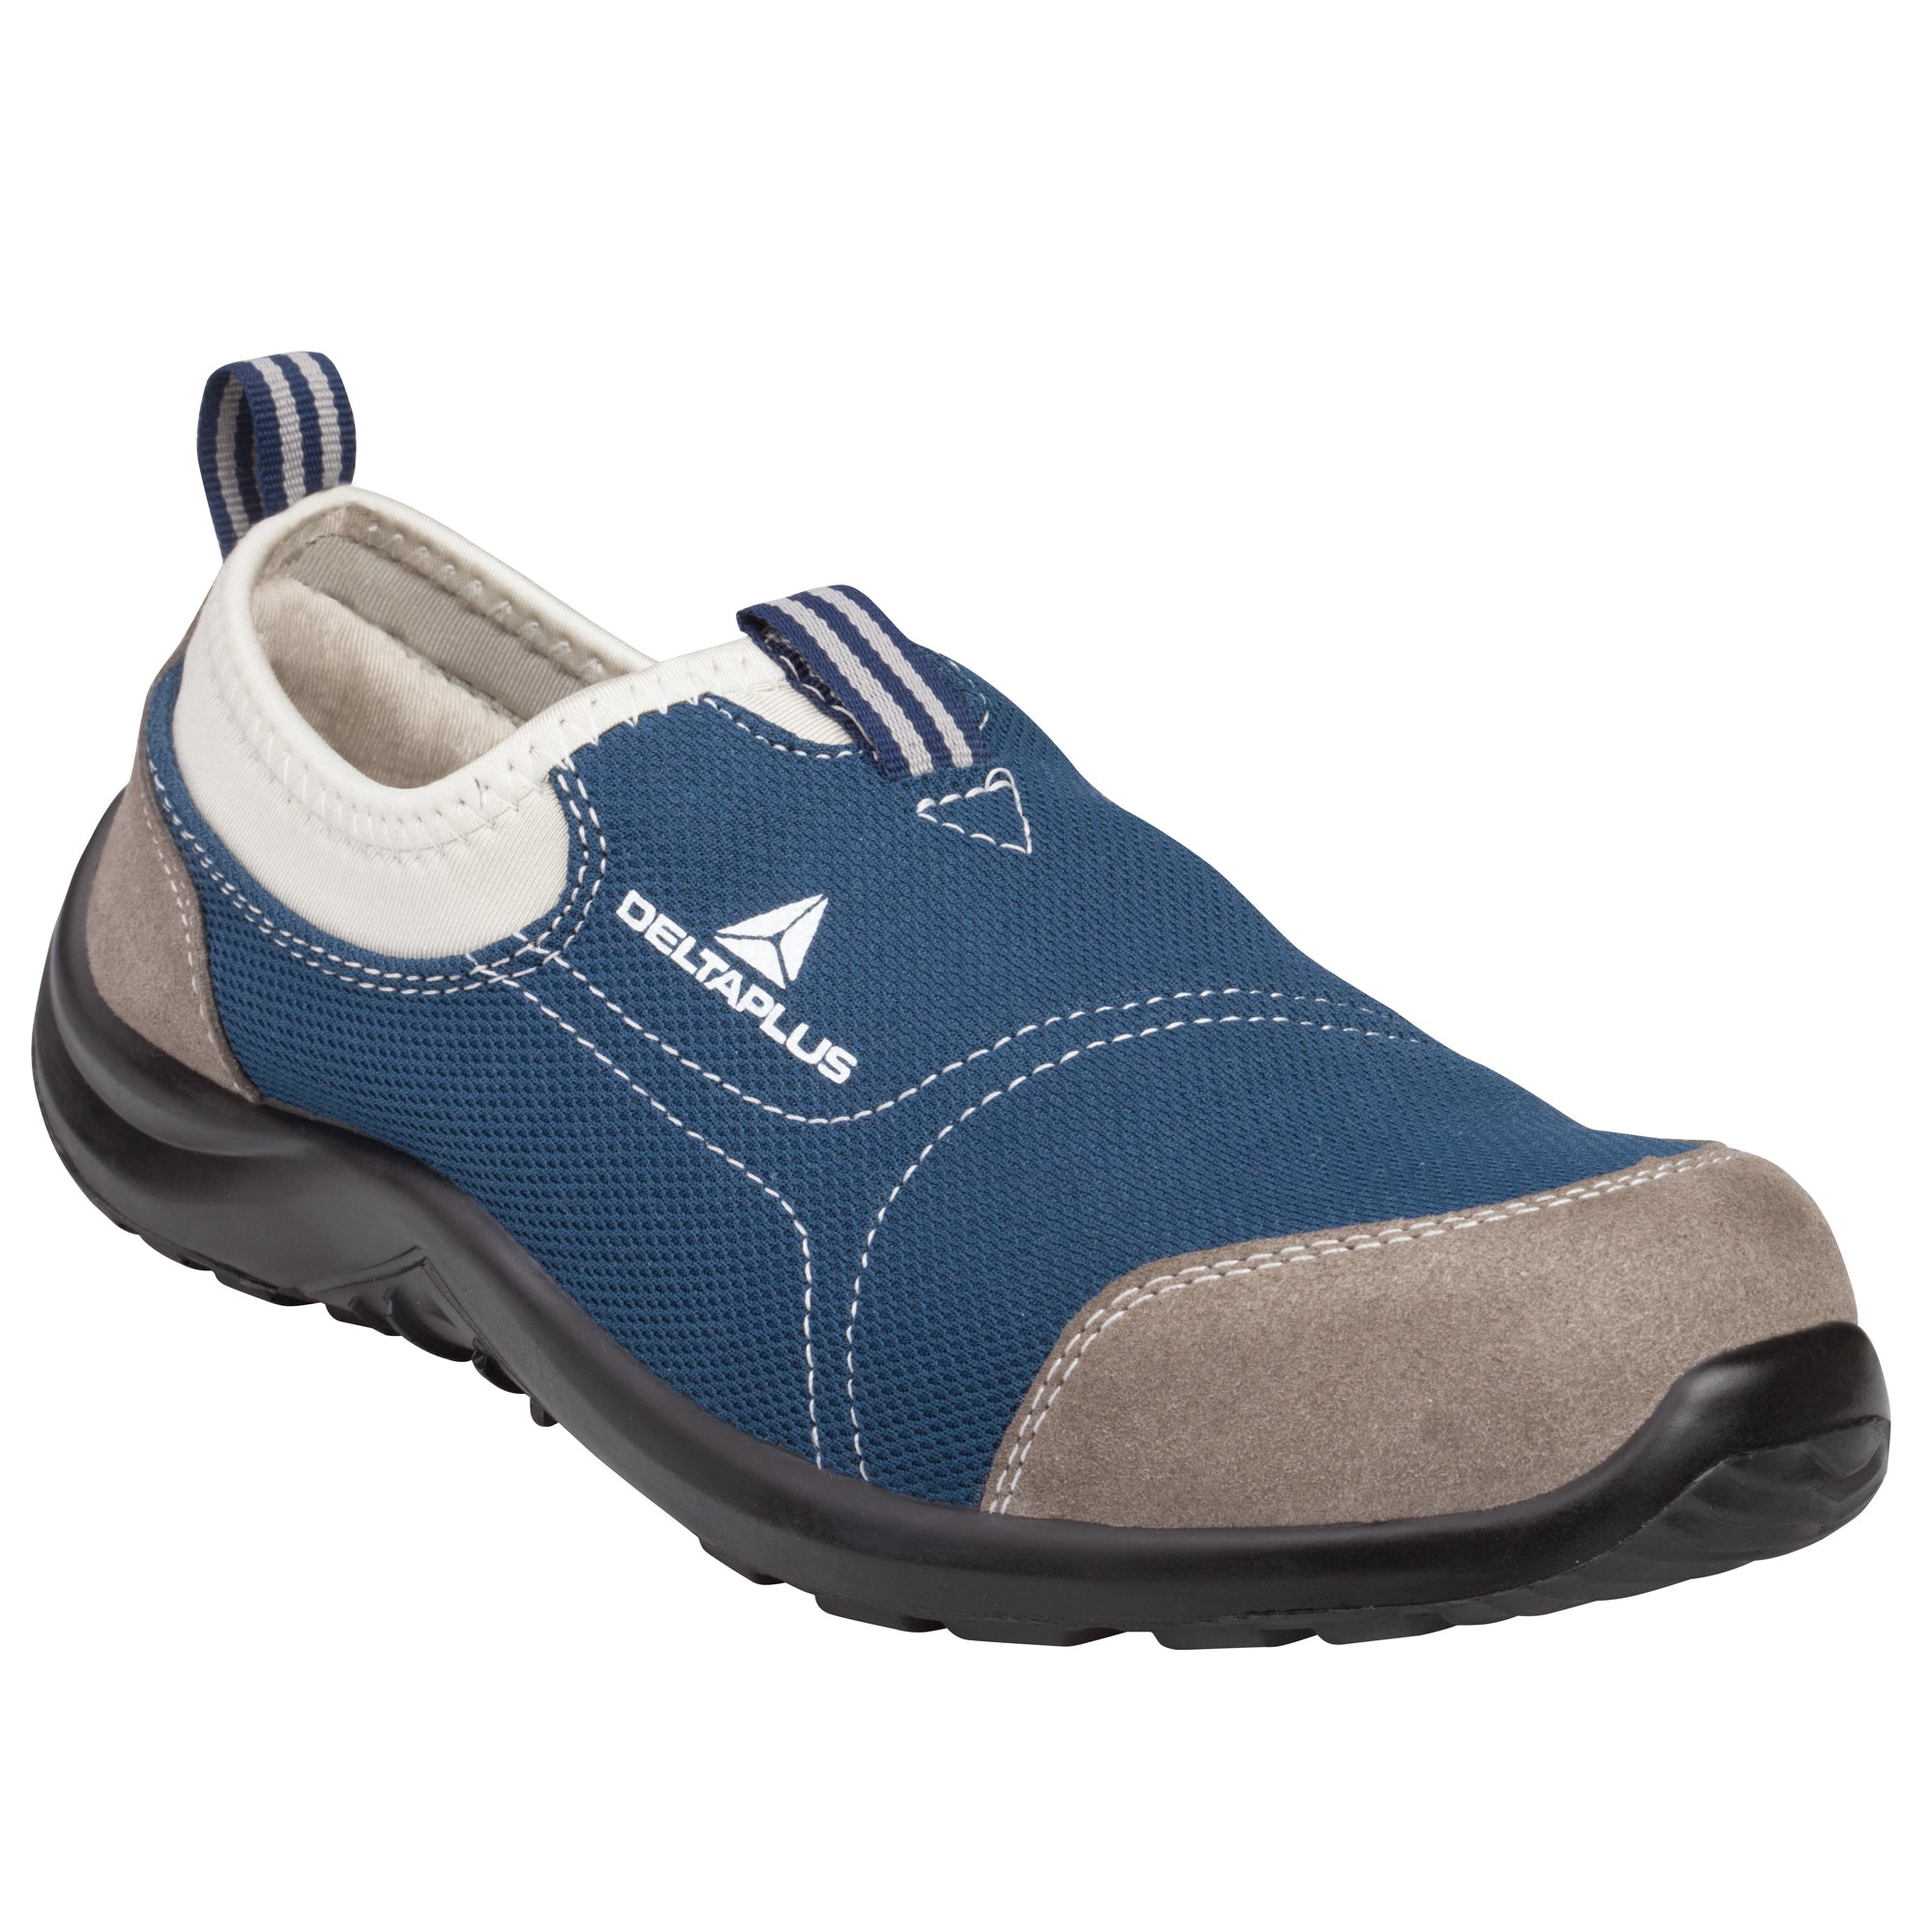 deltaplus-calzatura-sicurezza-miami-blu-s1p-src-n-43